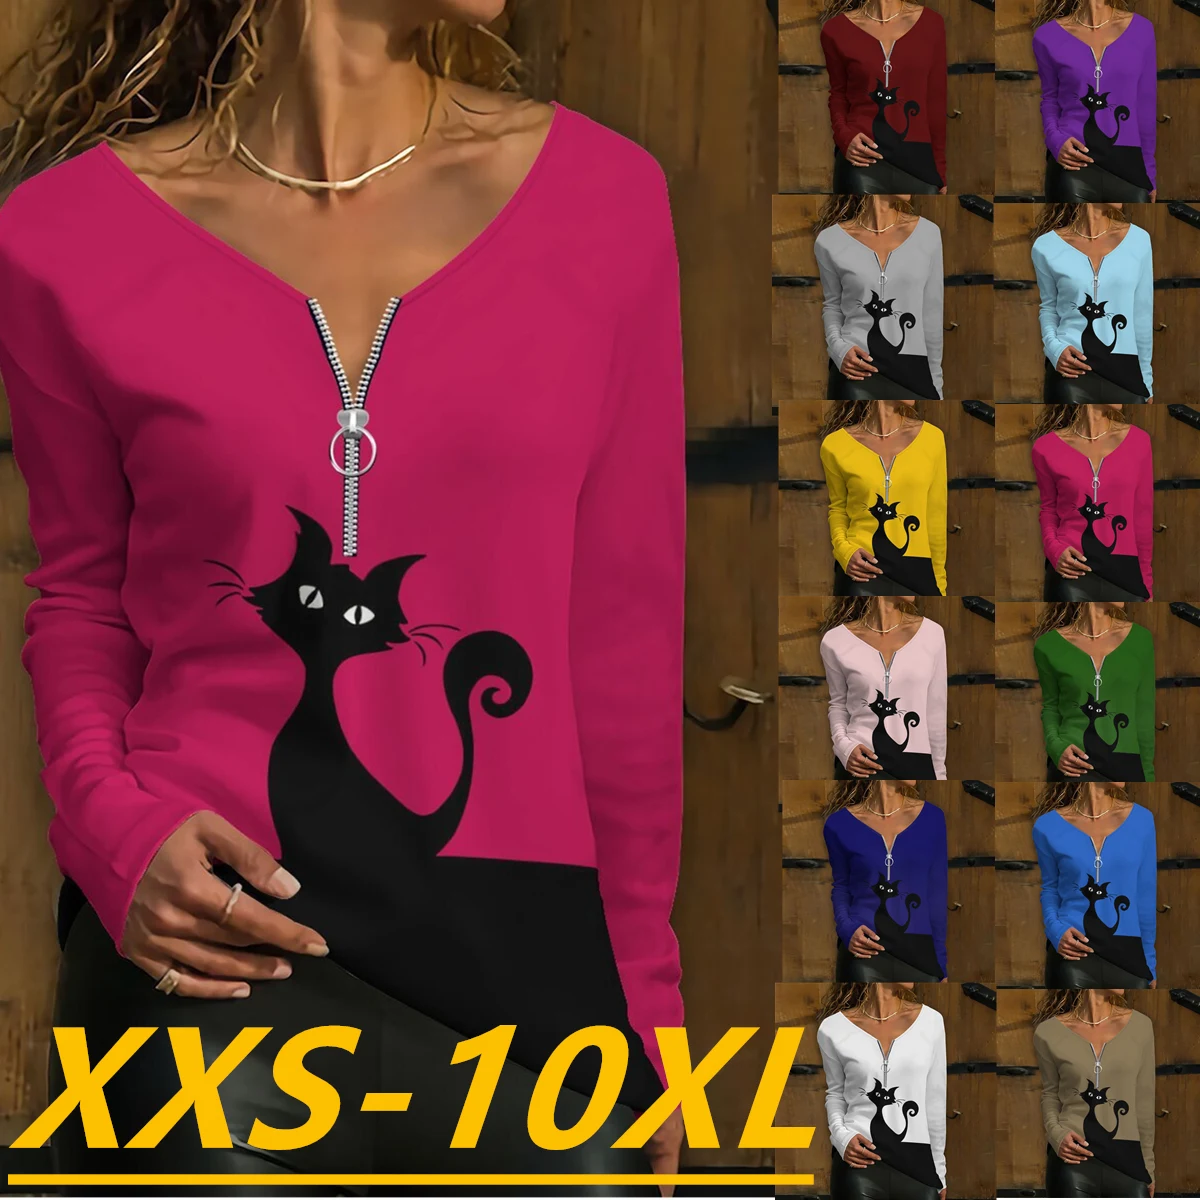 

Autumn/Winter 2022 Fashion Women's Geometric Color Contrast Printing Long Sleeve Zipper V-Neck Casual Plus Size Top XXS-10XL